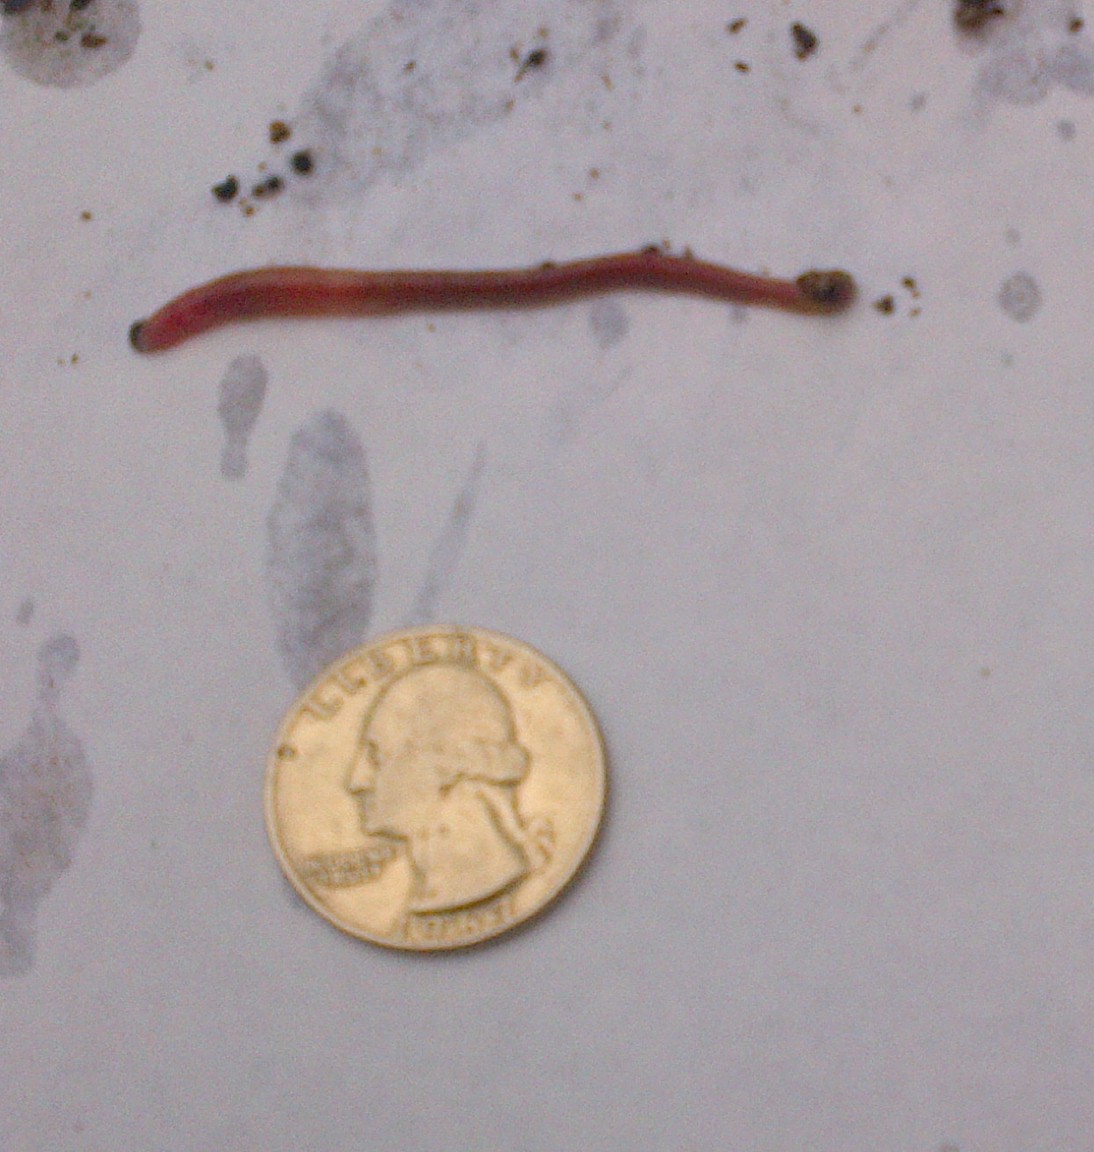 bloodworm 1